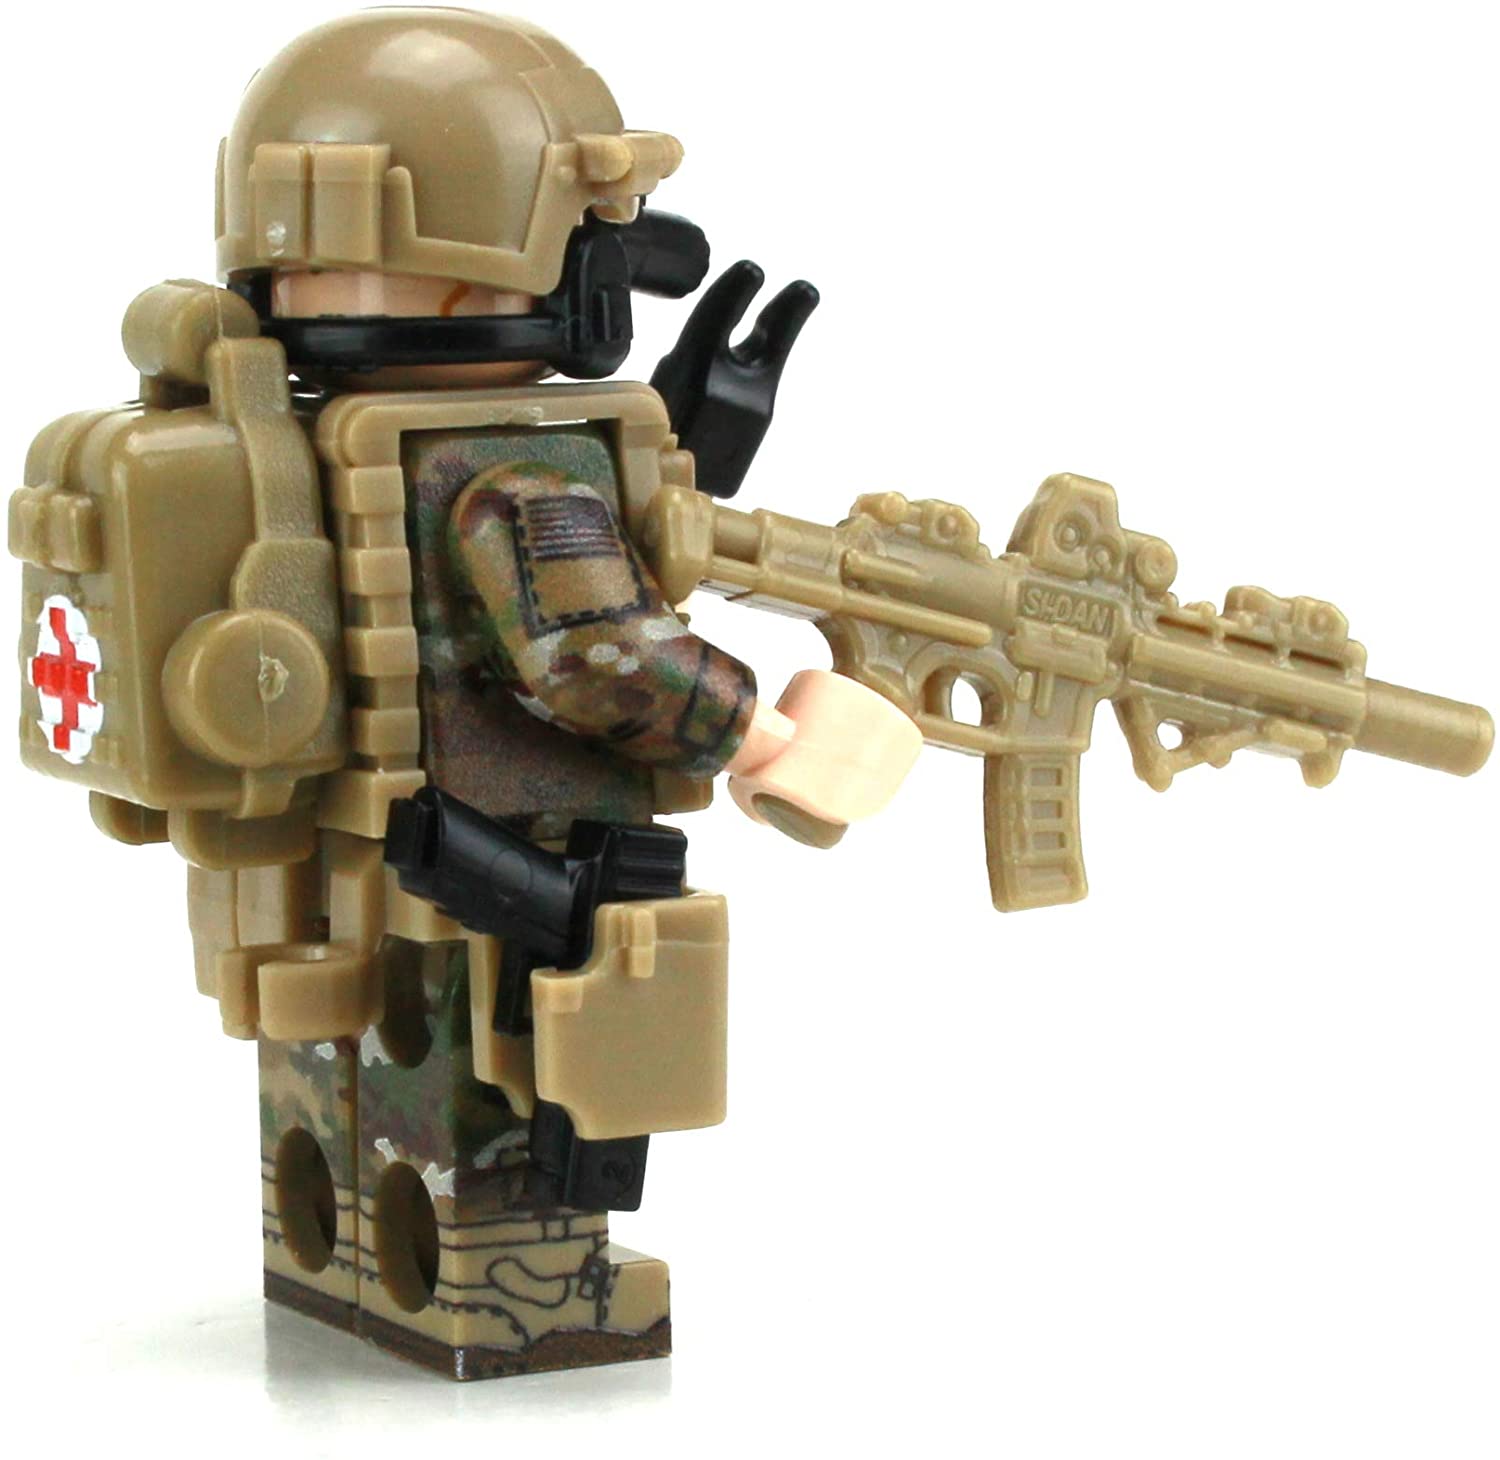 US Air Force Pararescue PJ OCP - Custom LEGO Military Minifigure